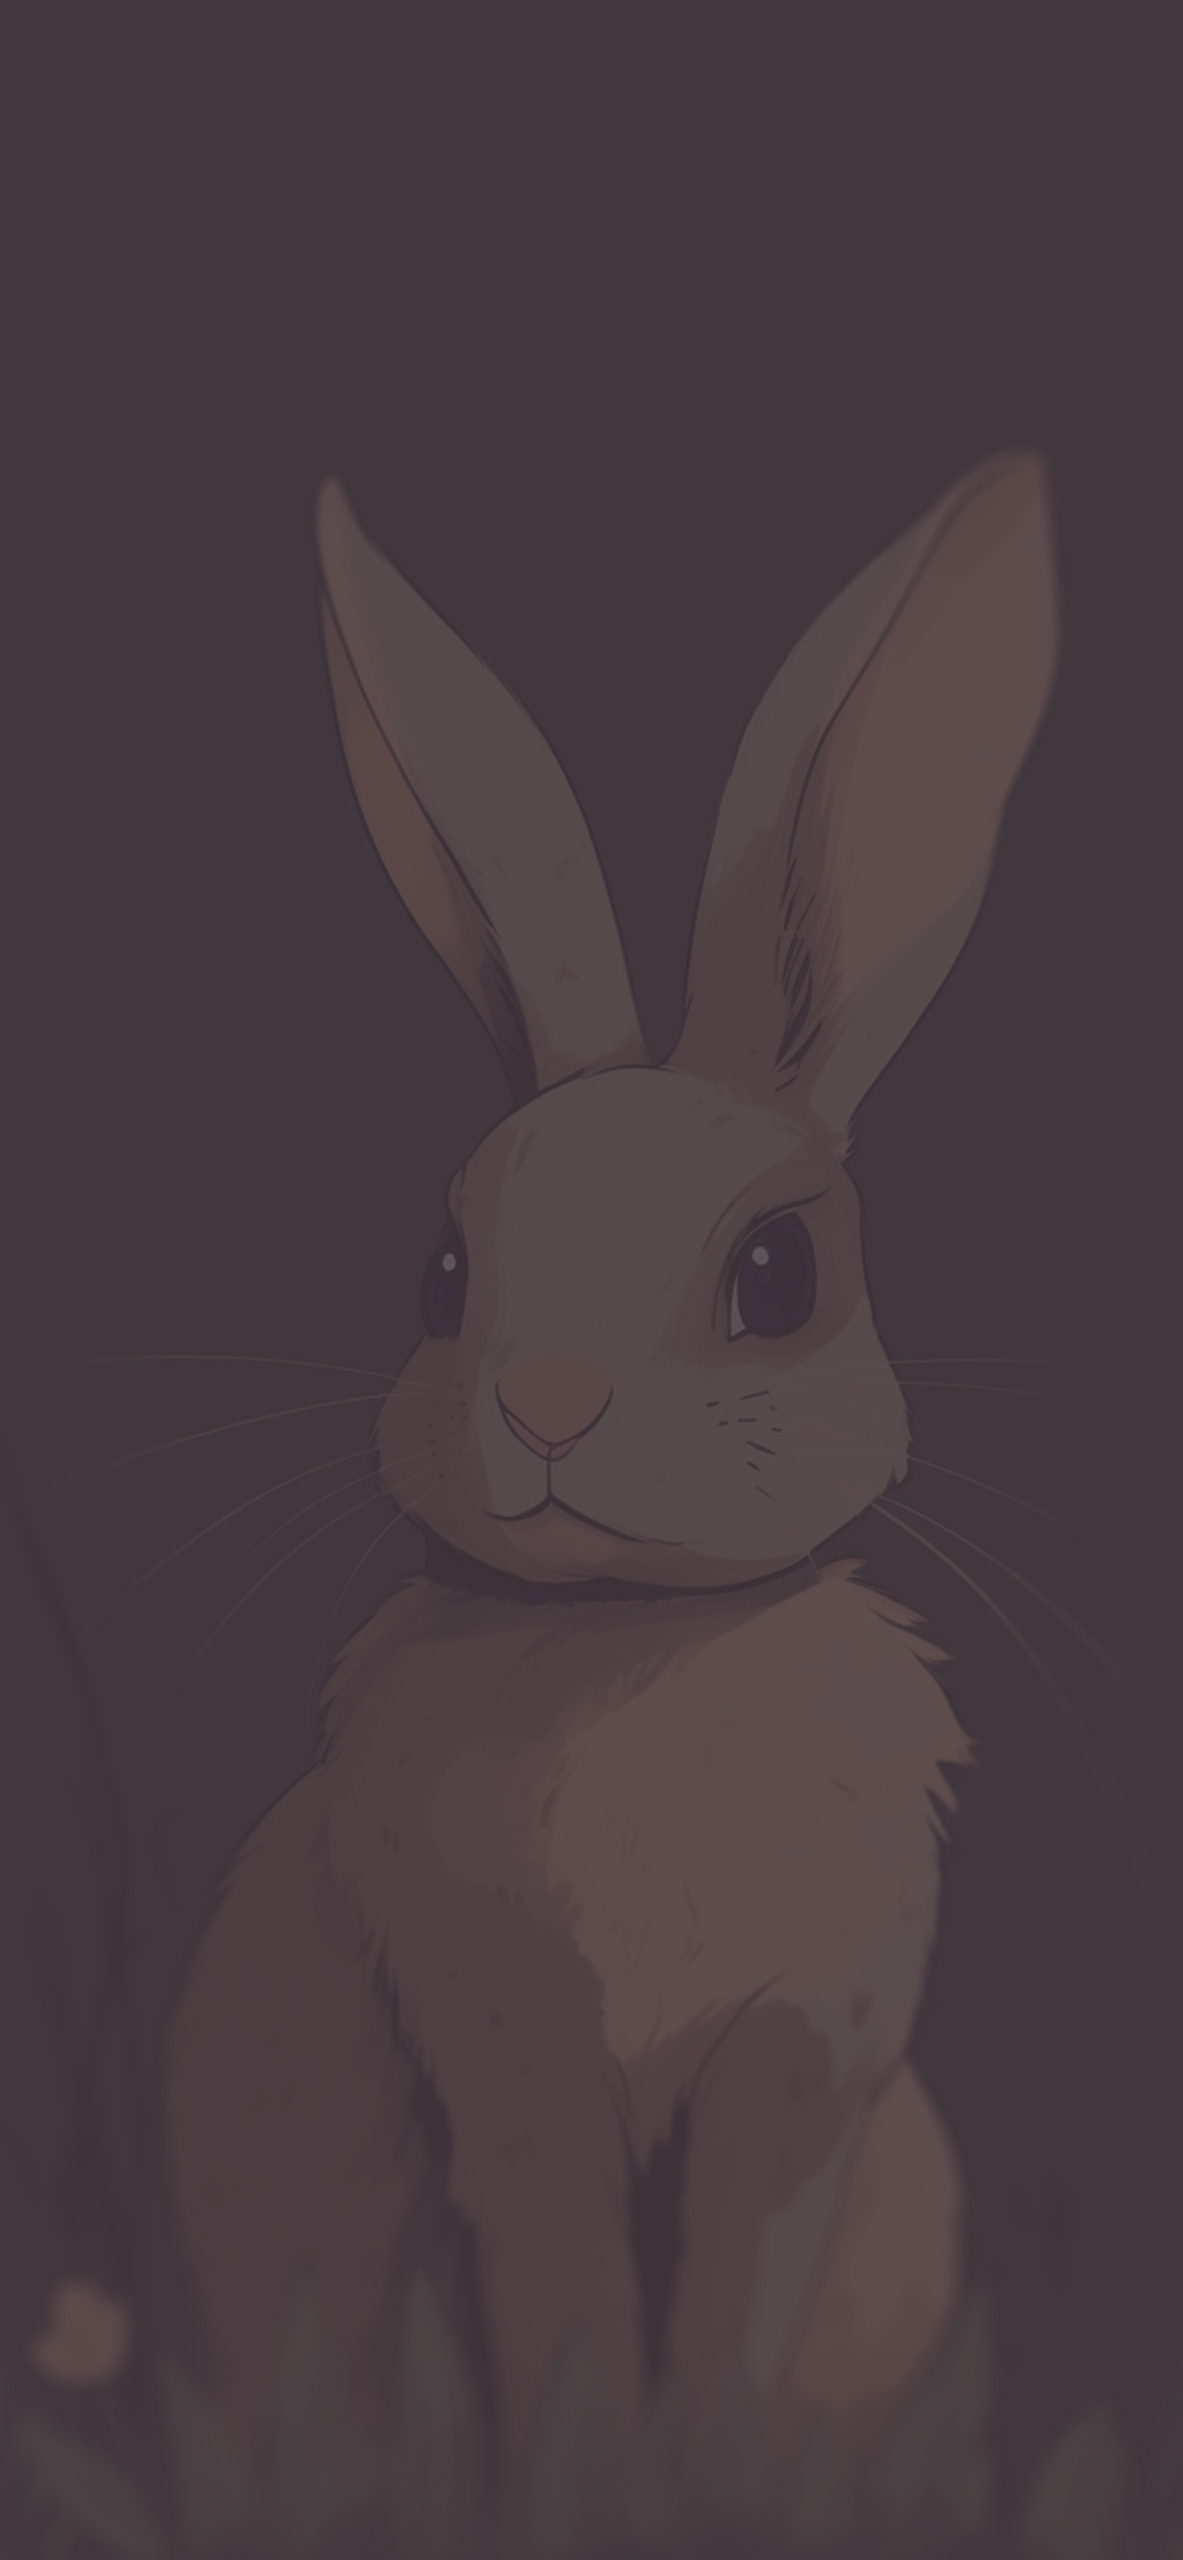 Rabbit Brown Wallpaper Rabbit Wallpaper for iPhone